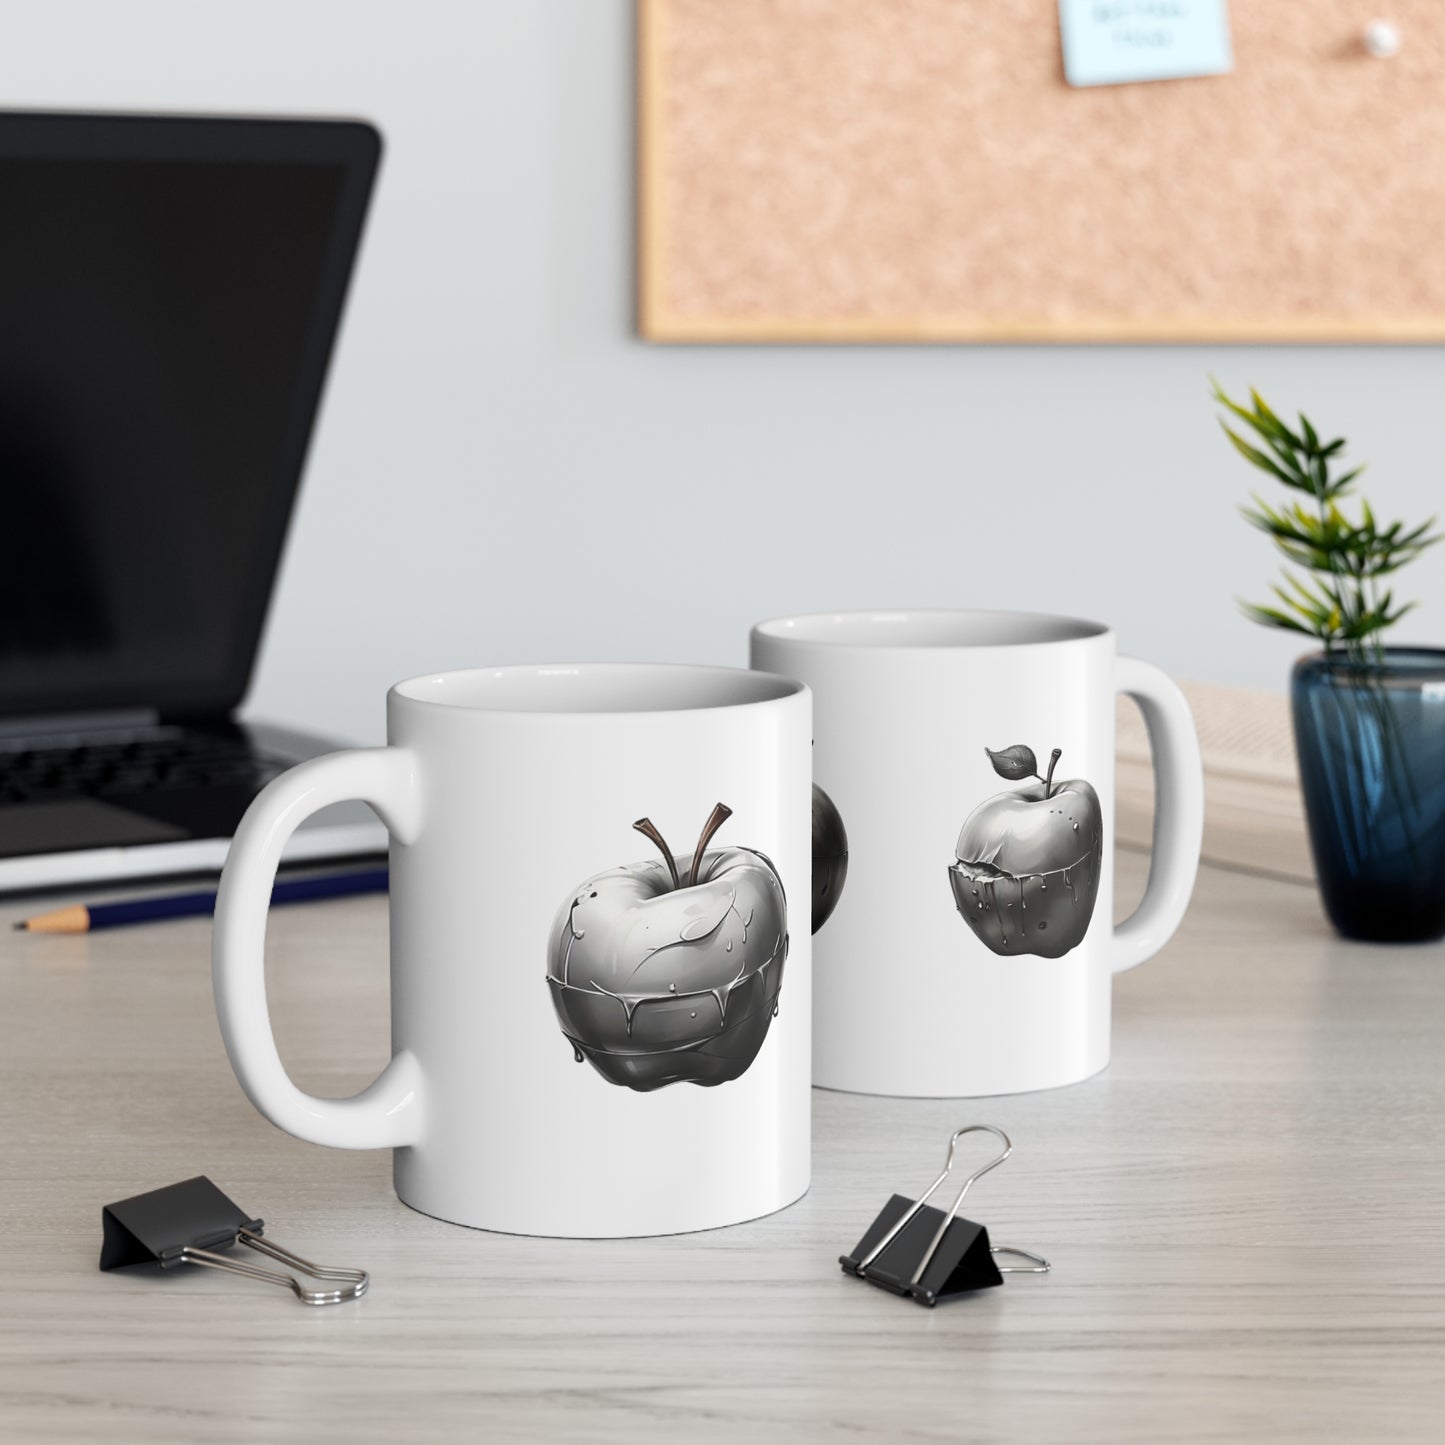 Black and White Cracked Apples Mug - Ceramic Coffee Mug 11oz